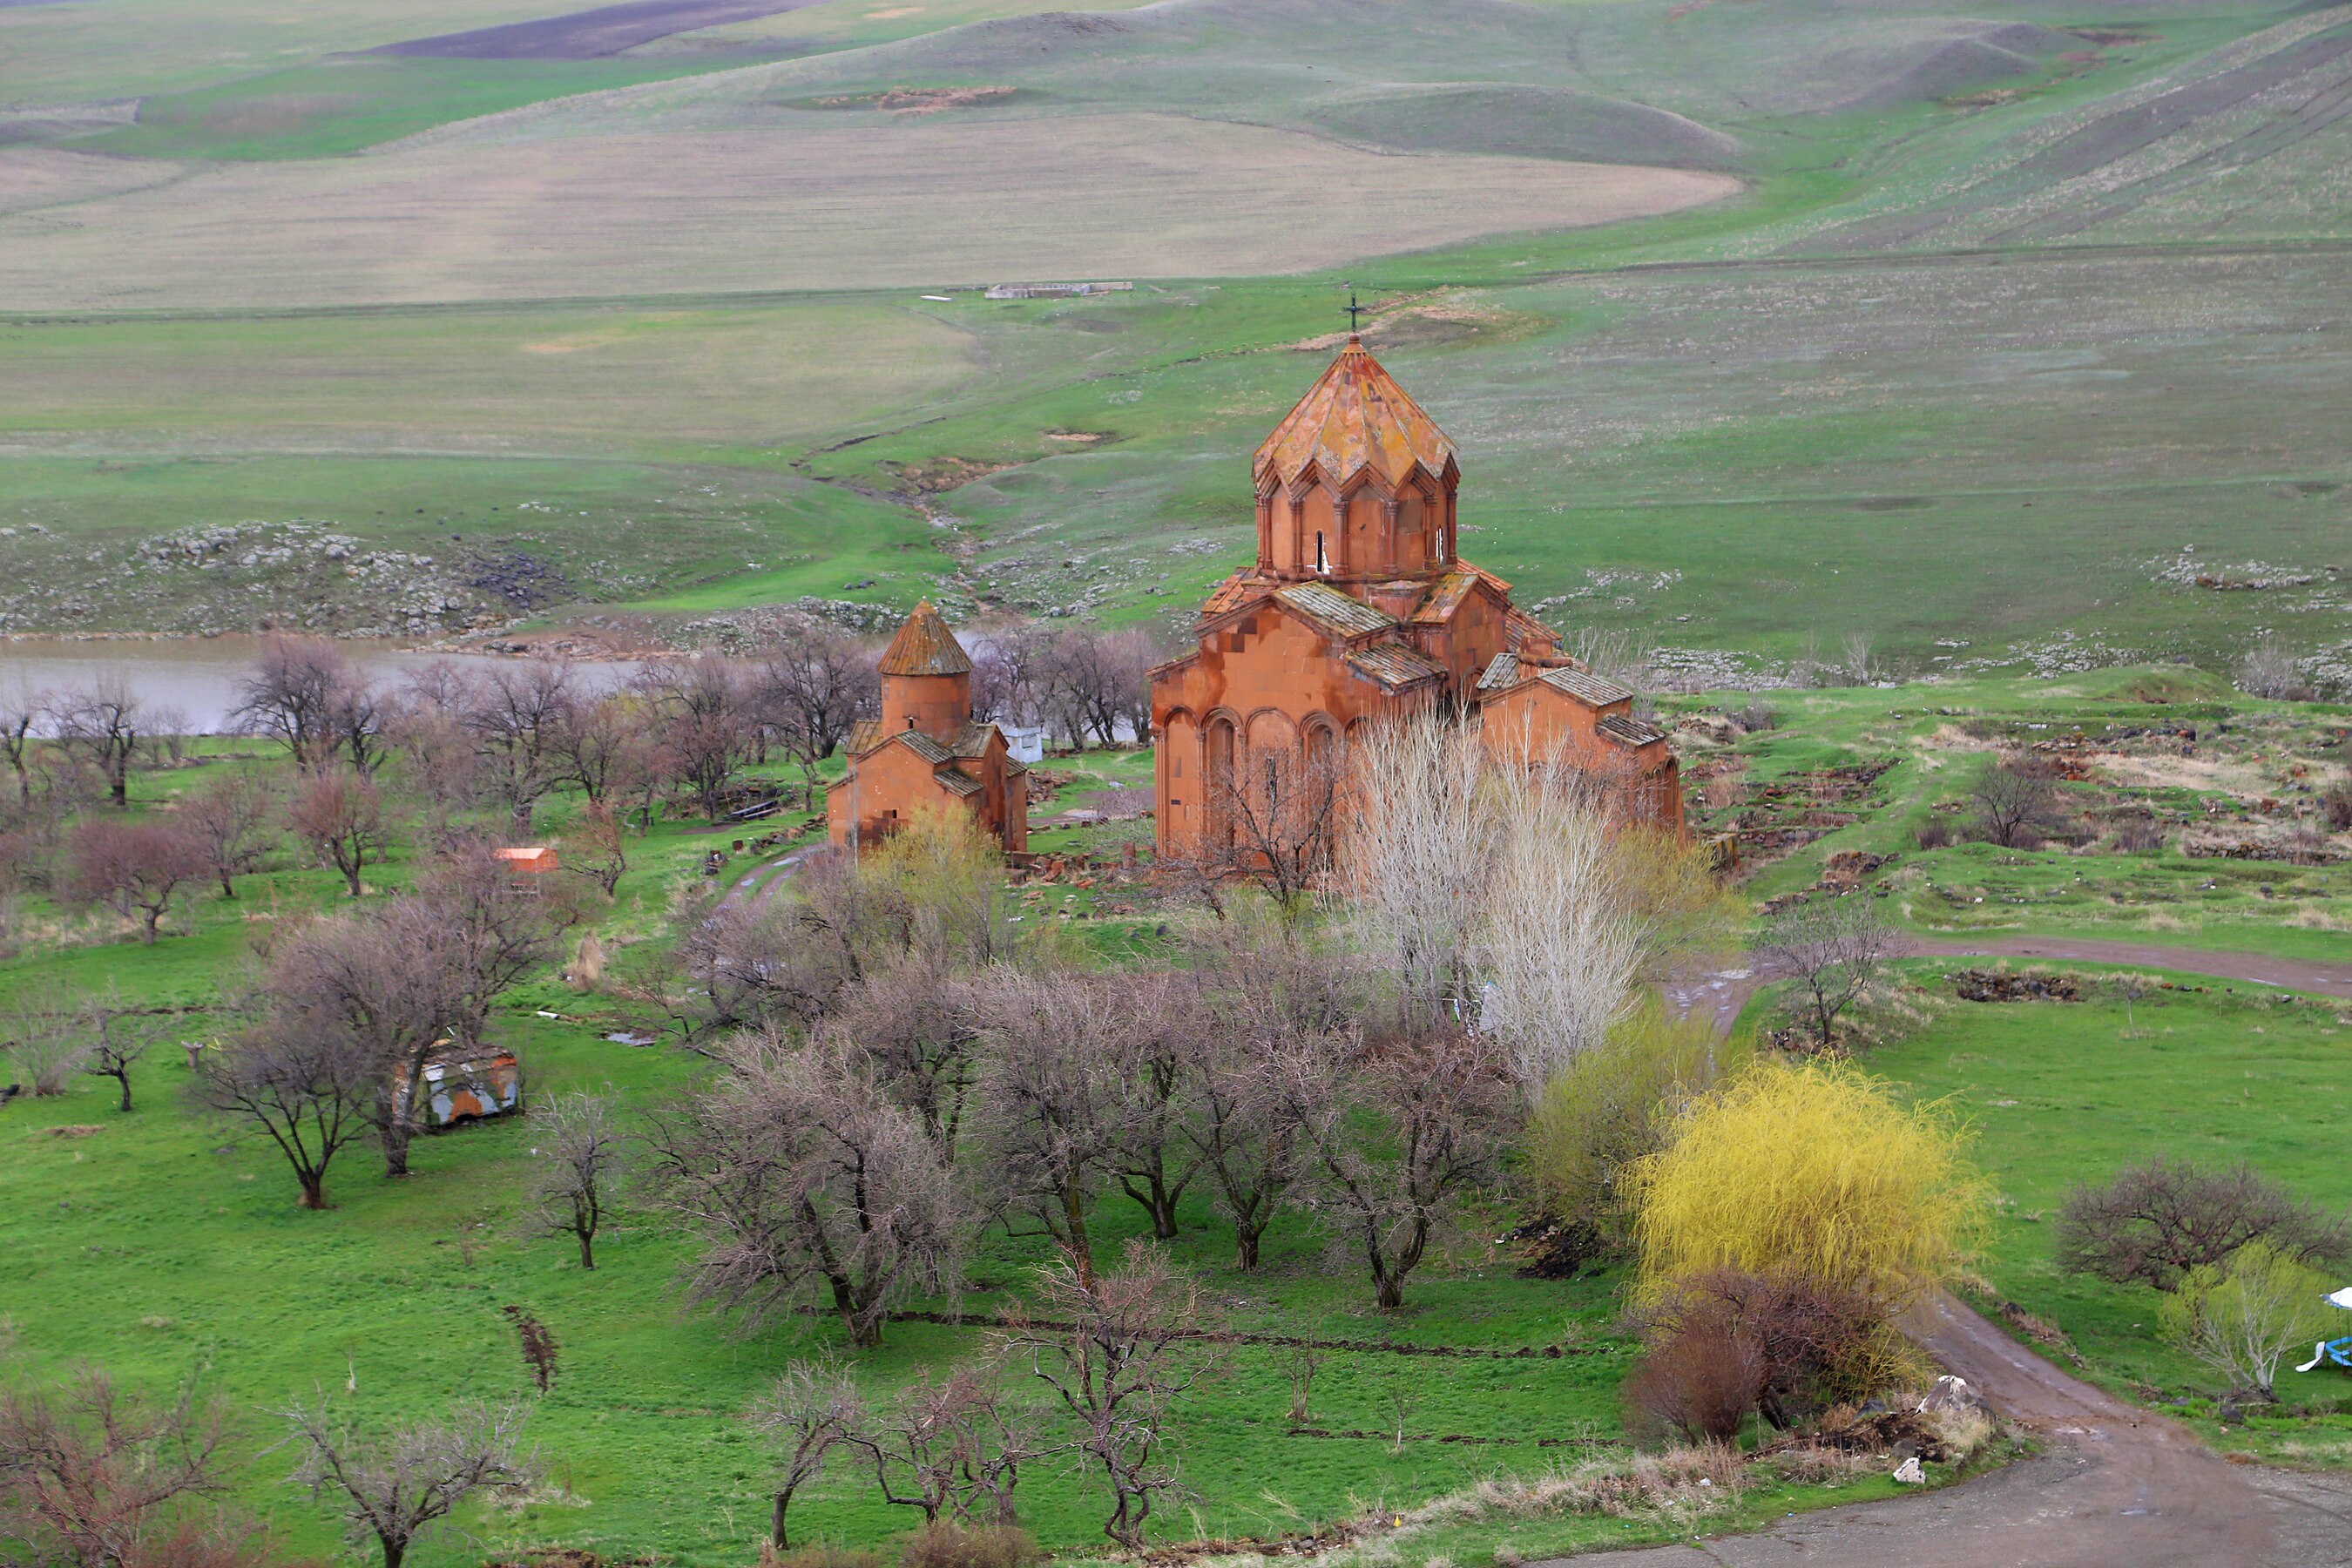 Marmashen Monastery, Armenia Photograph: Vahag851 Licensing: CC-BY-SA-4.0